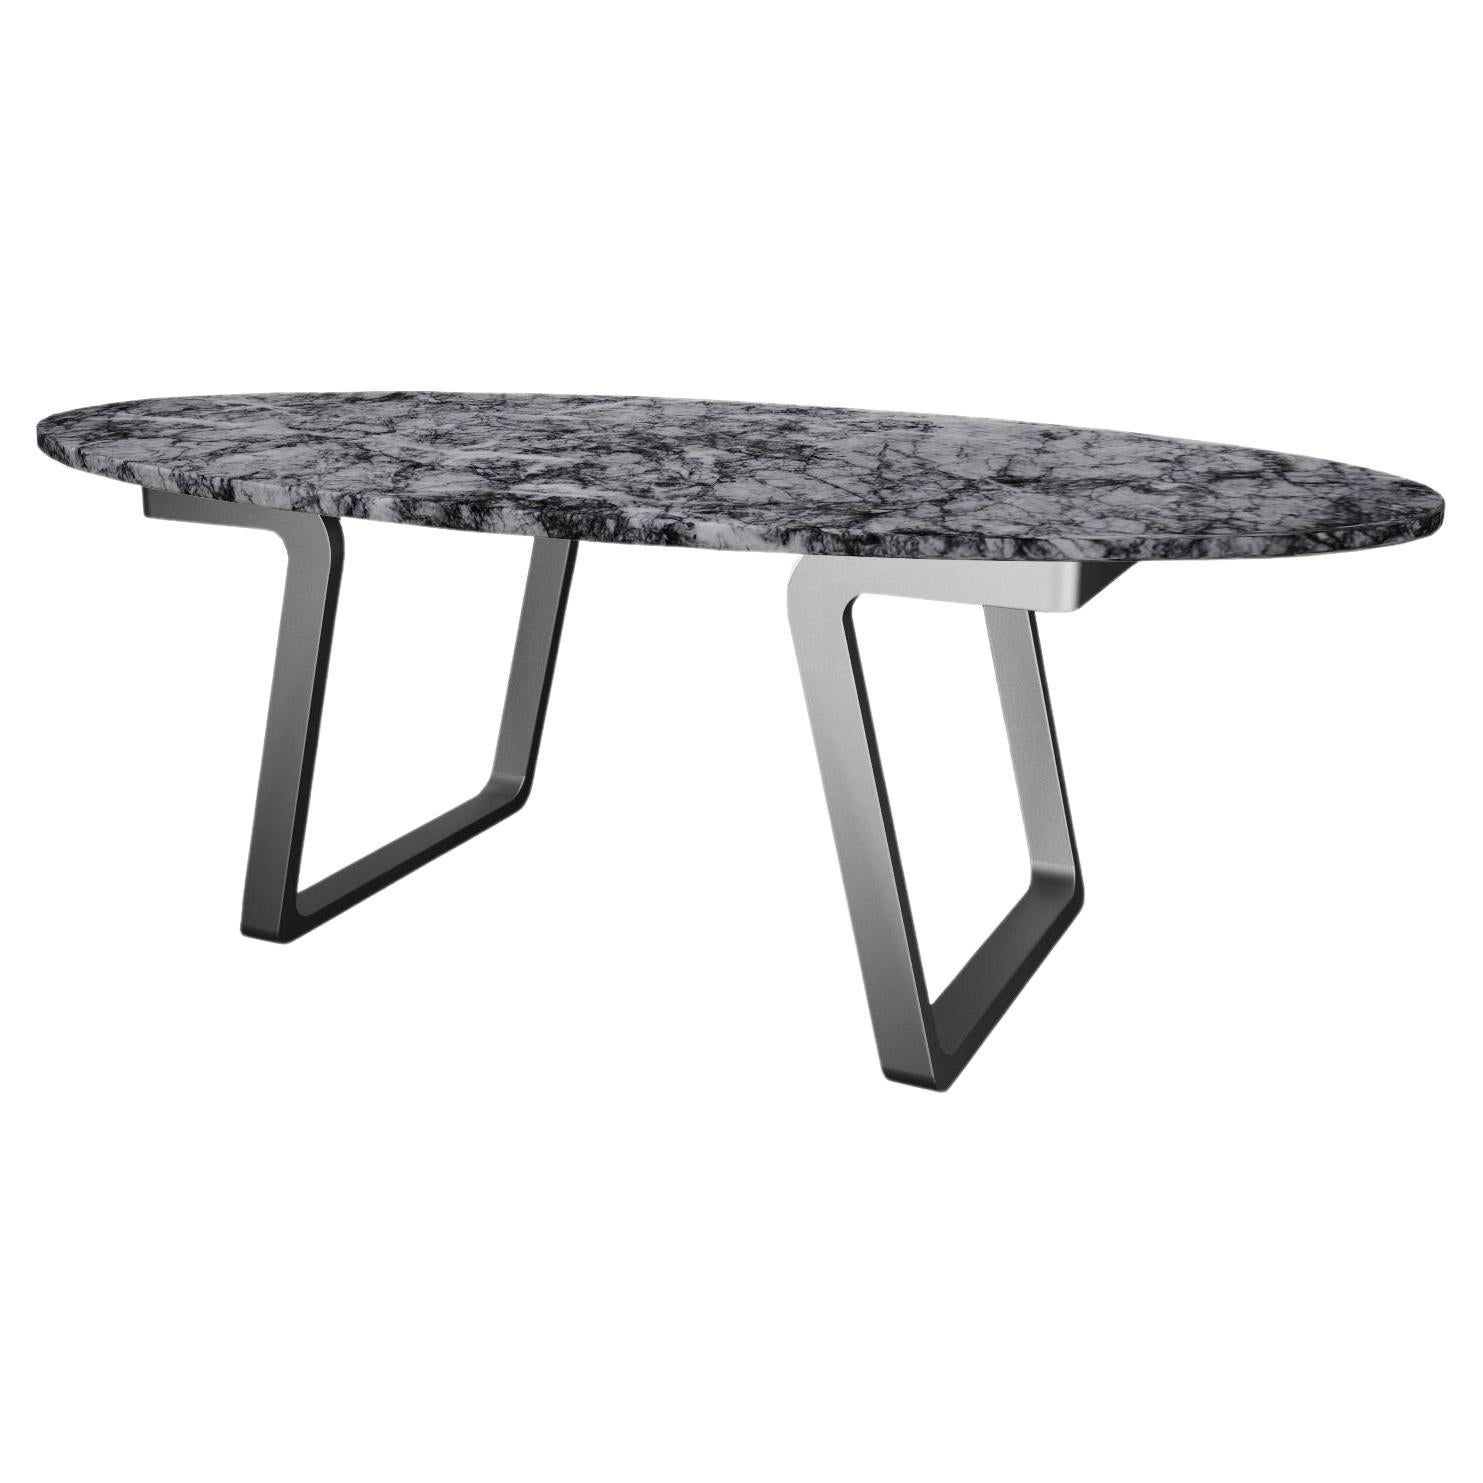 NORDST JERRY Coffee Table, Italian Grey Rain Marble, Danish Modern Design, New